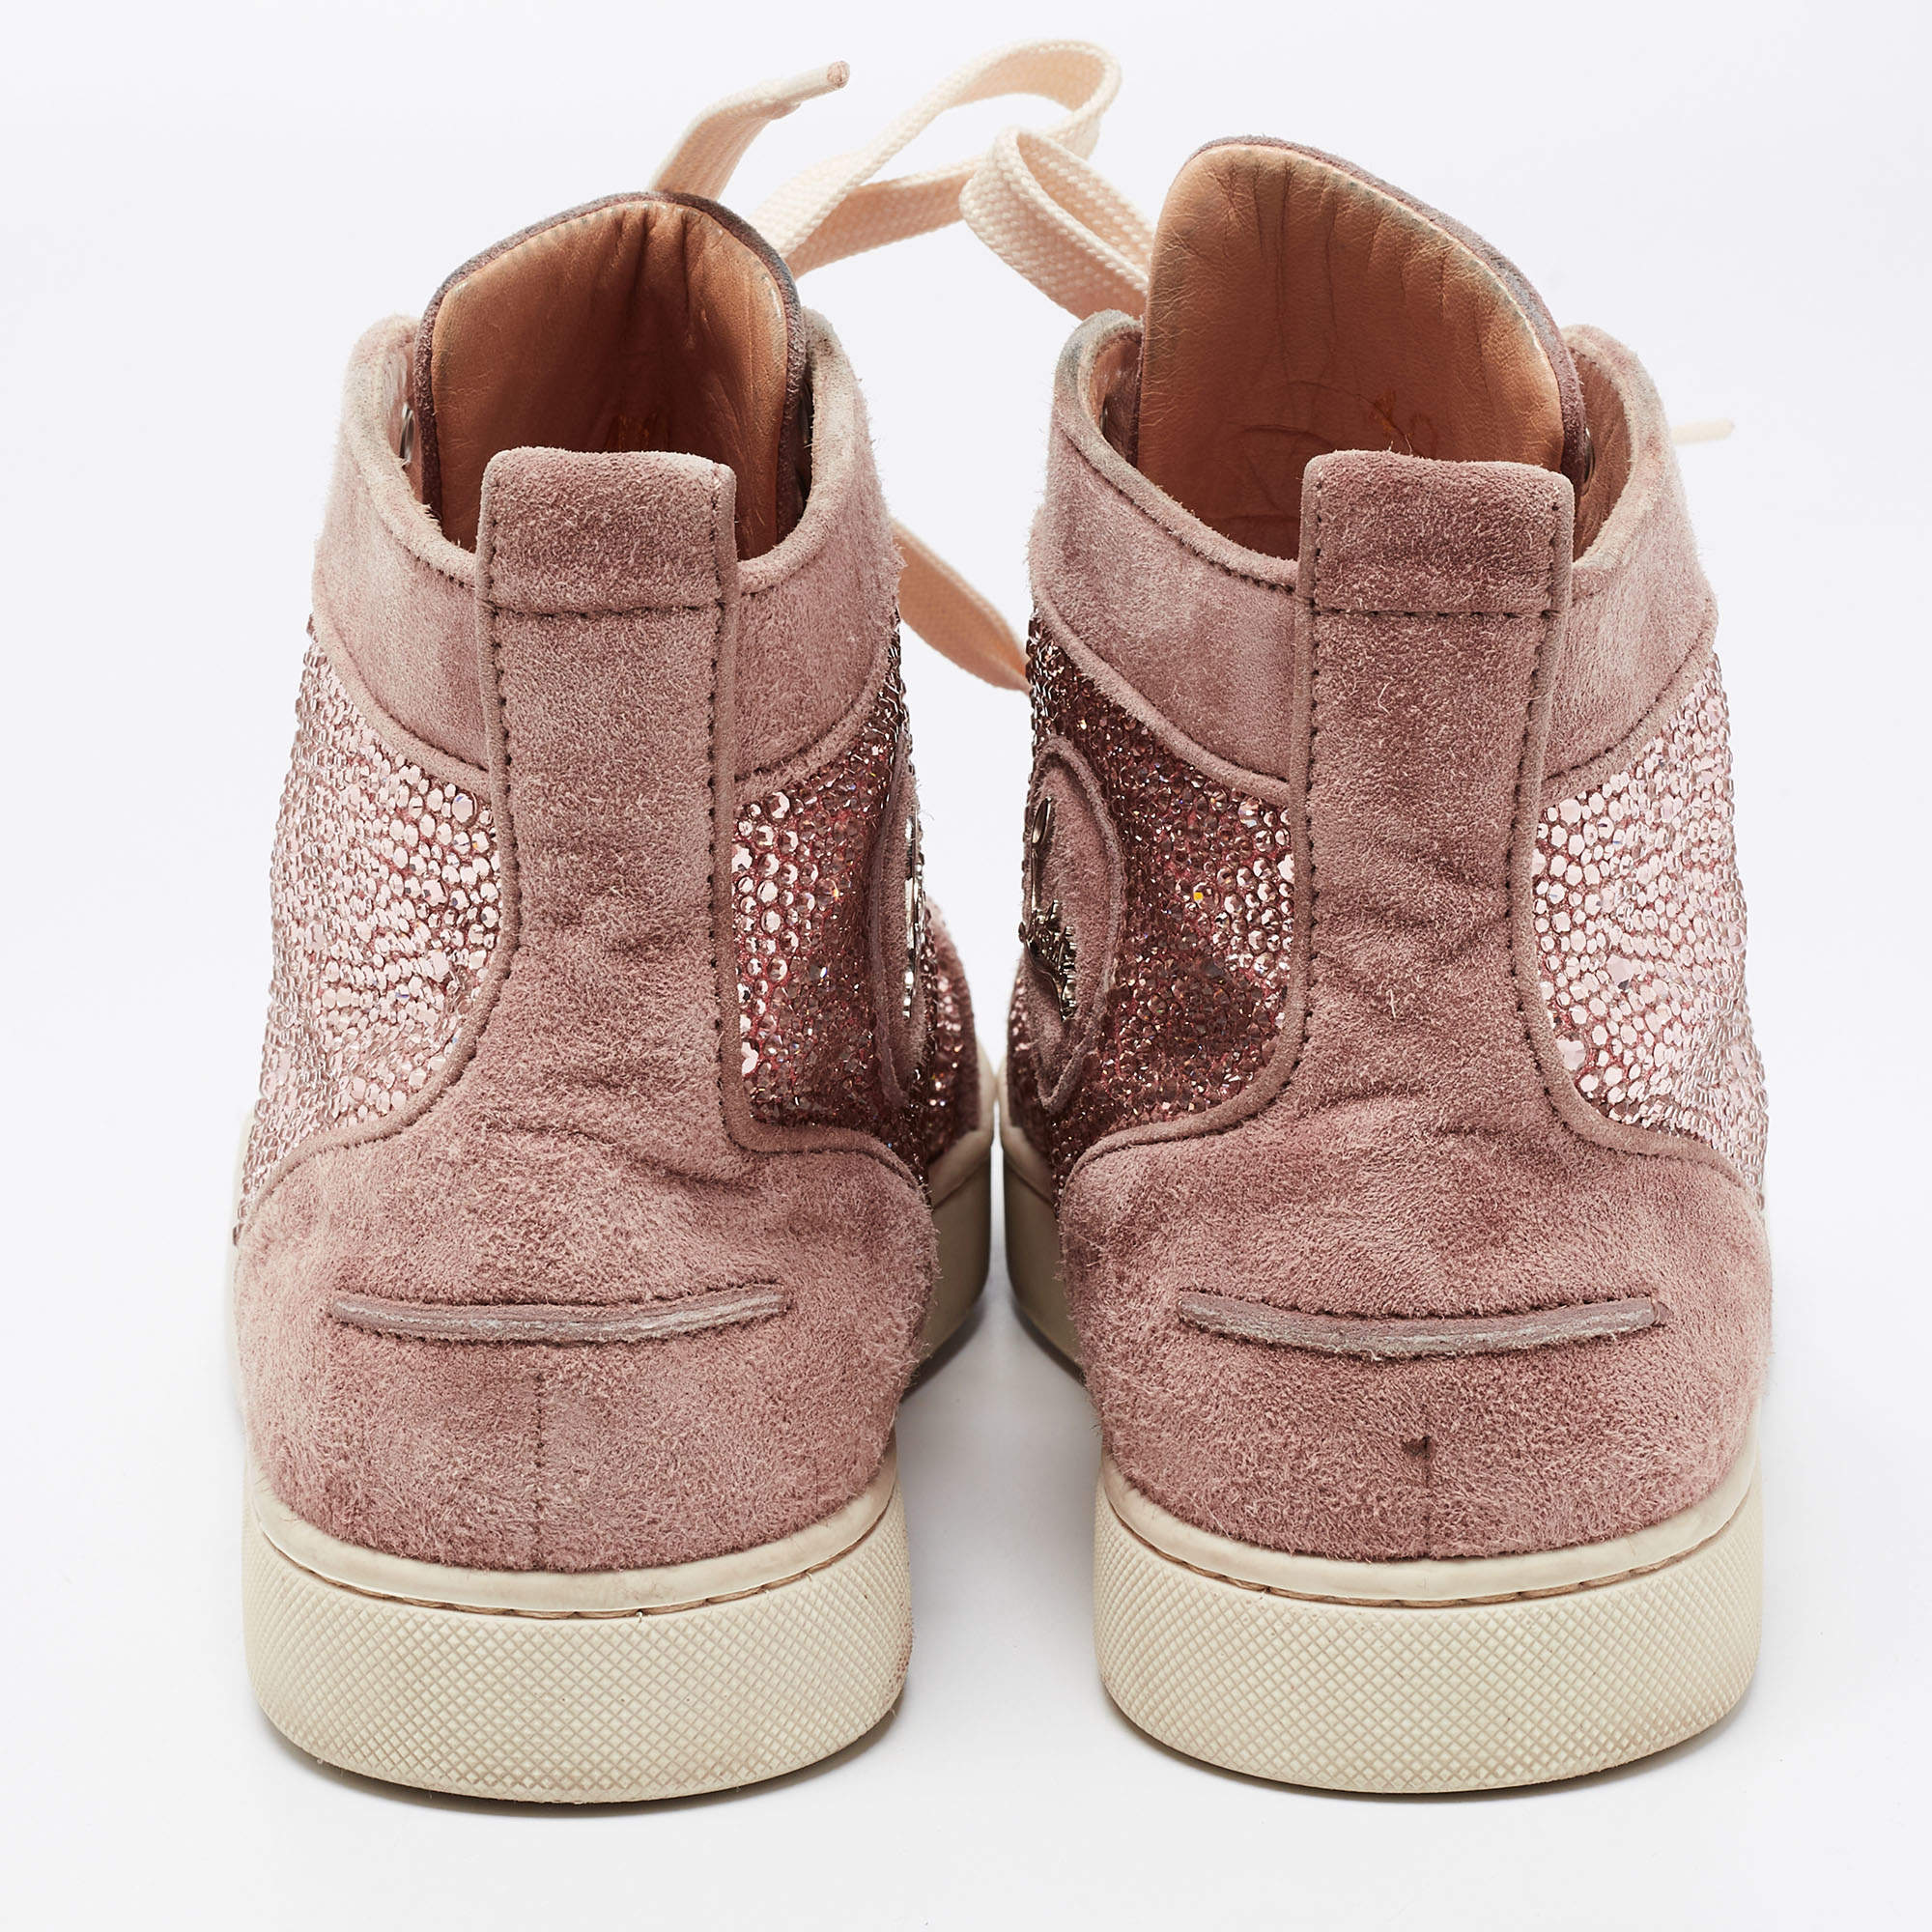 Christian Louboutin Pink Fashion Sneakers